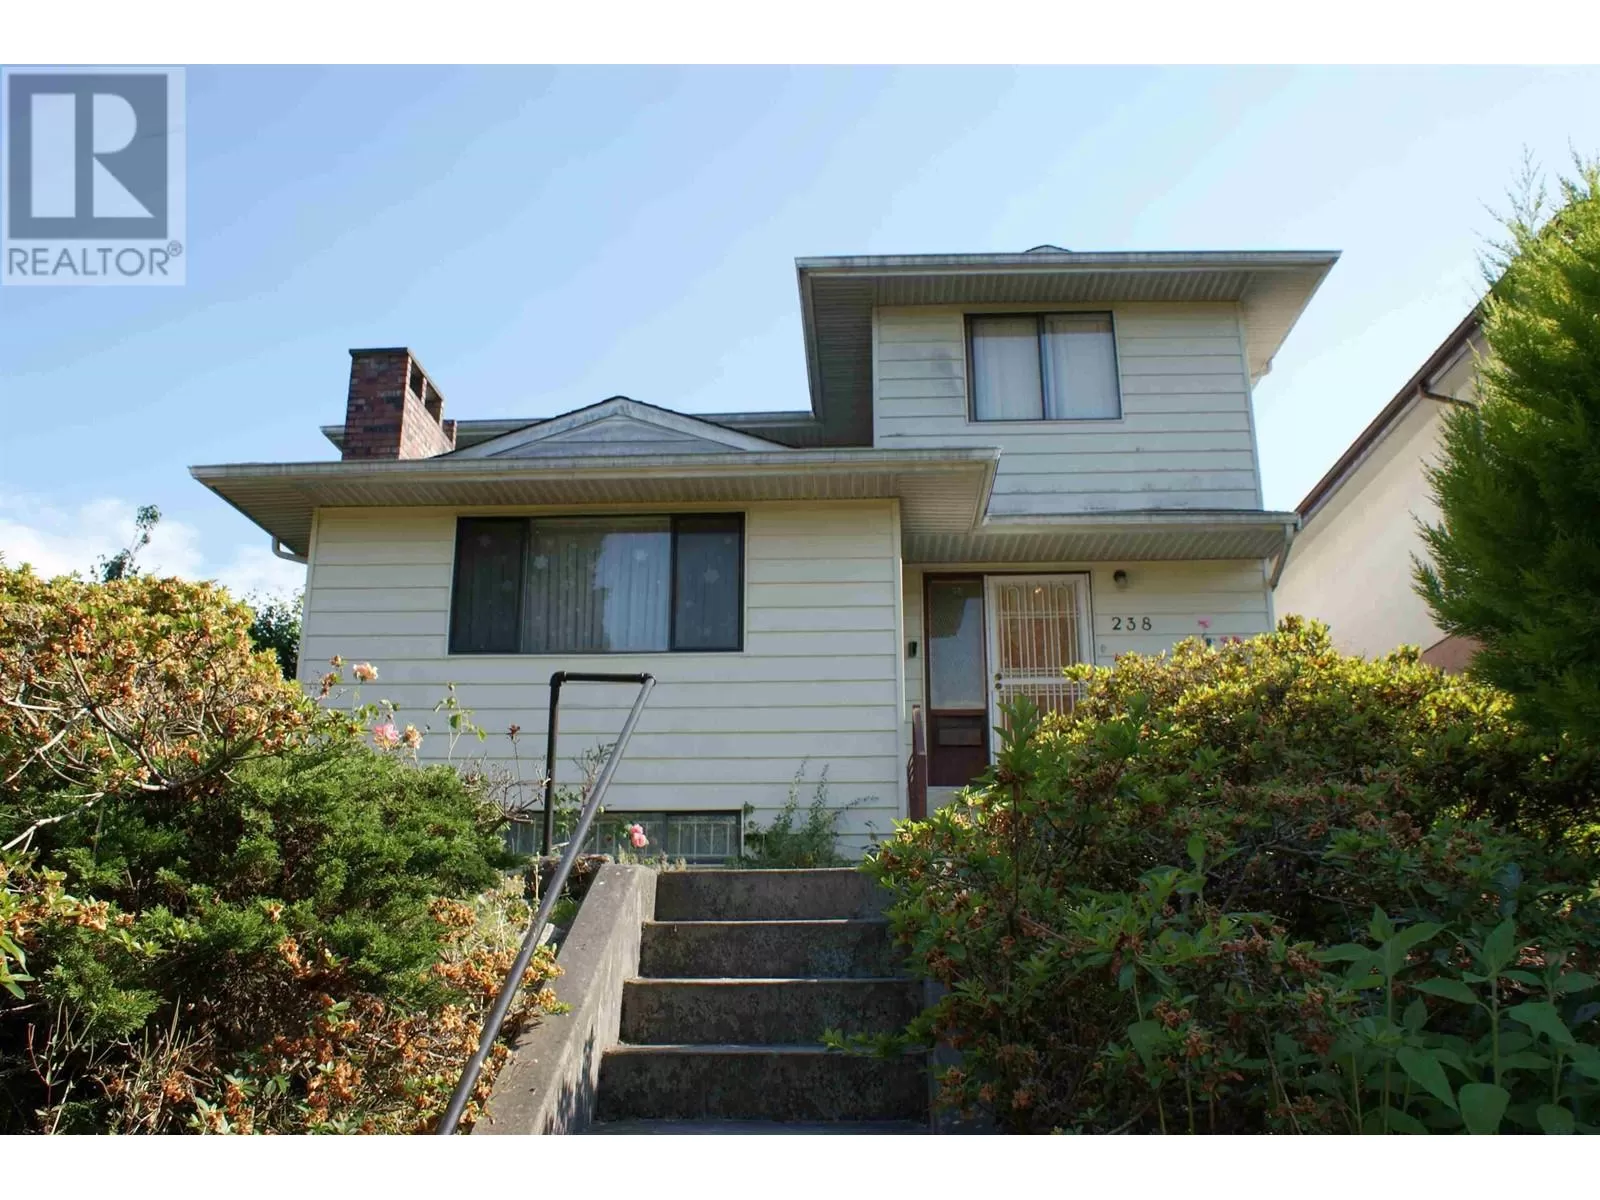 House for rent: 238 E 20th Avenue, Vancouver, British Columbia V5V 1M1